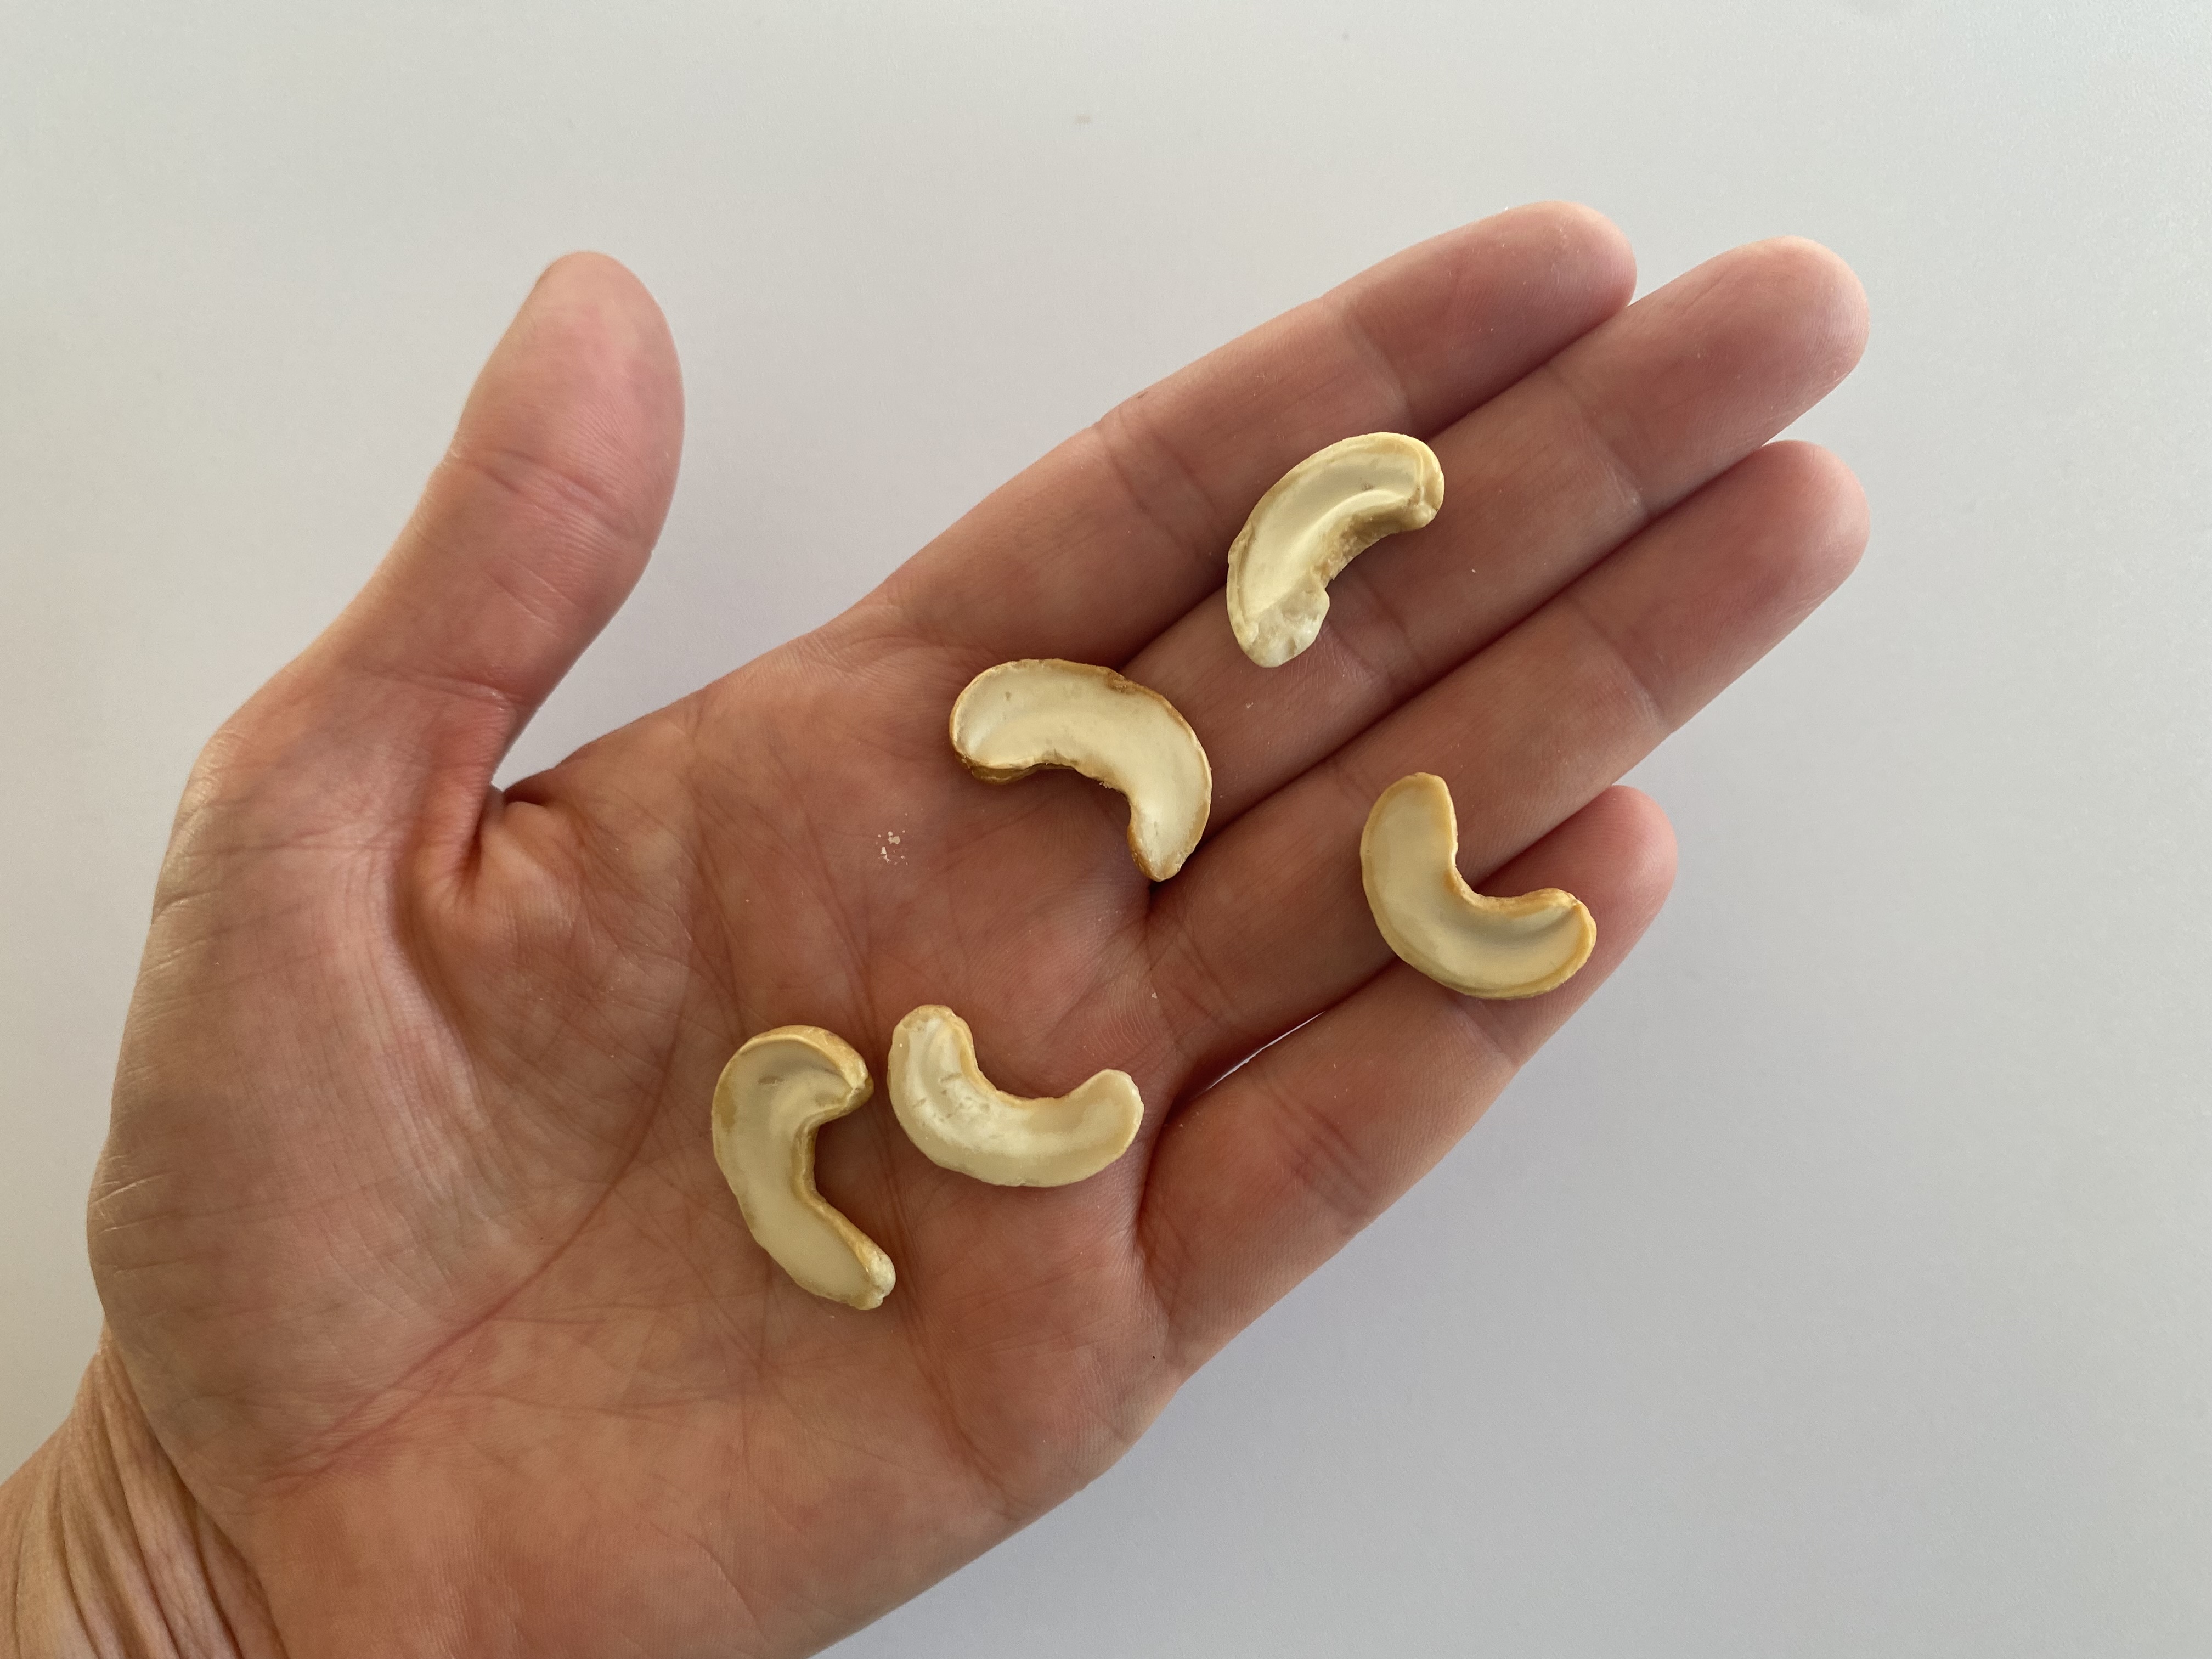 a hand holding five cashew halves